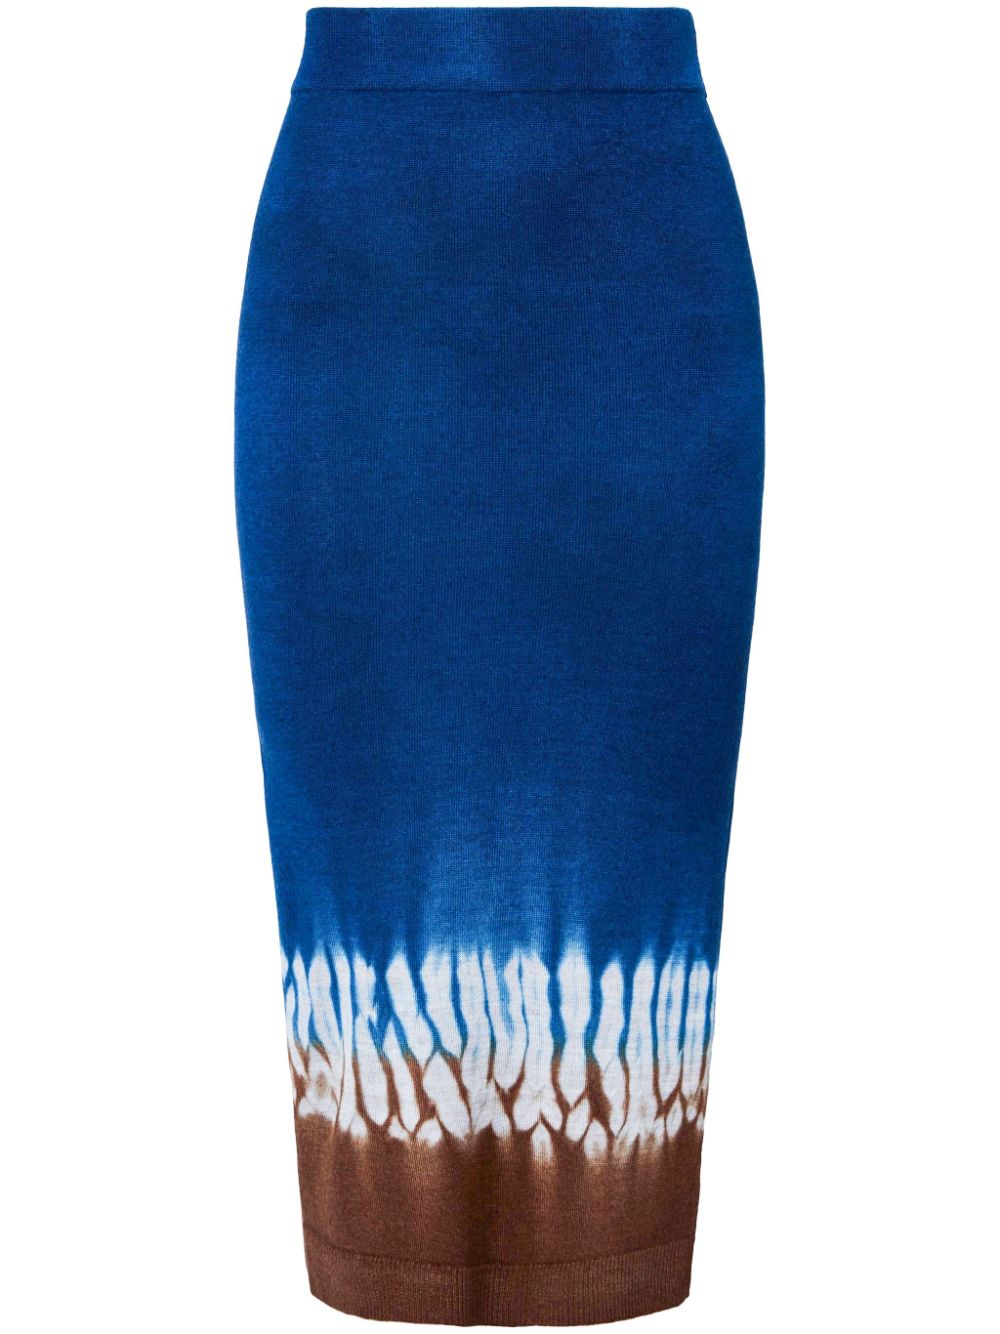 Altuzarra Morse tie-dye knit skirt - Blue von Altuzarra